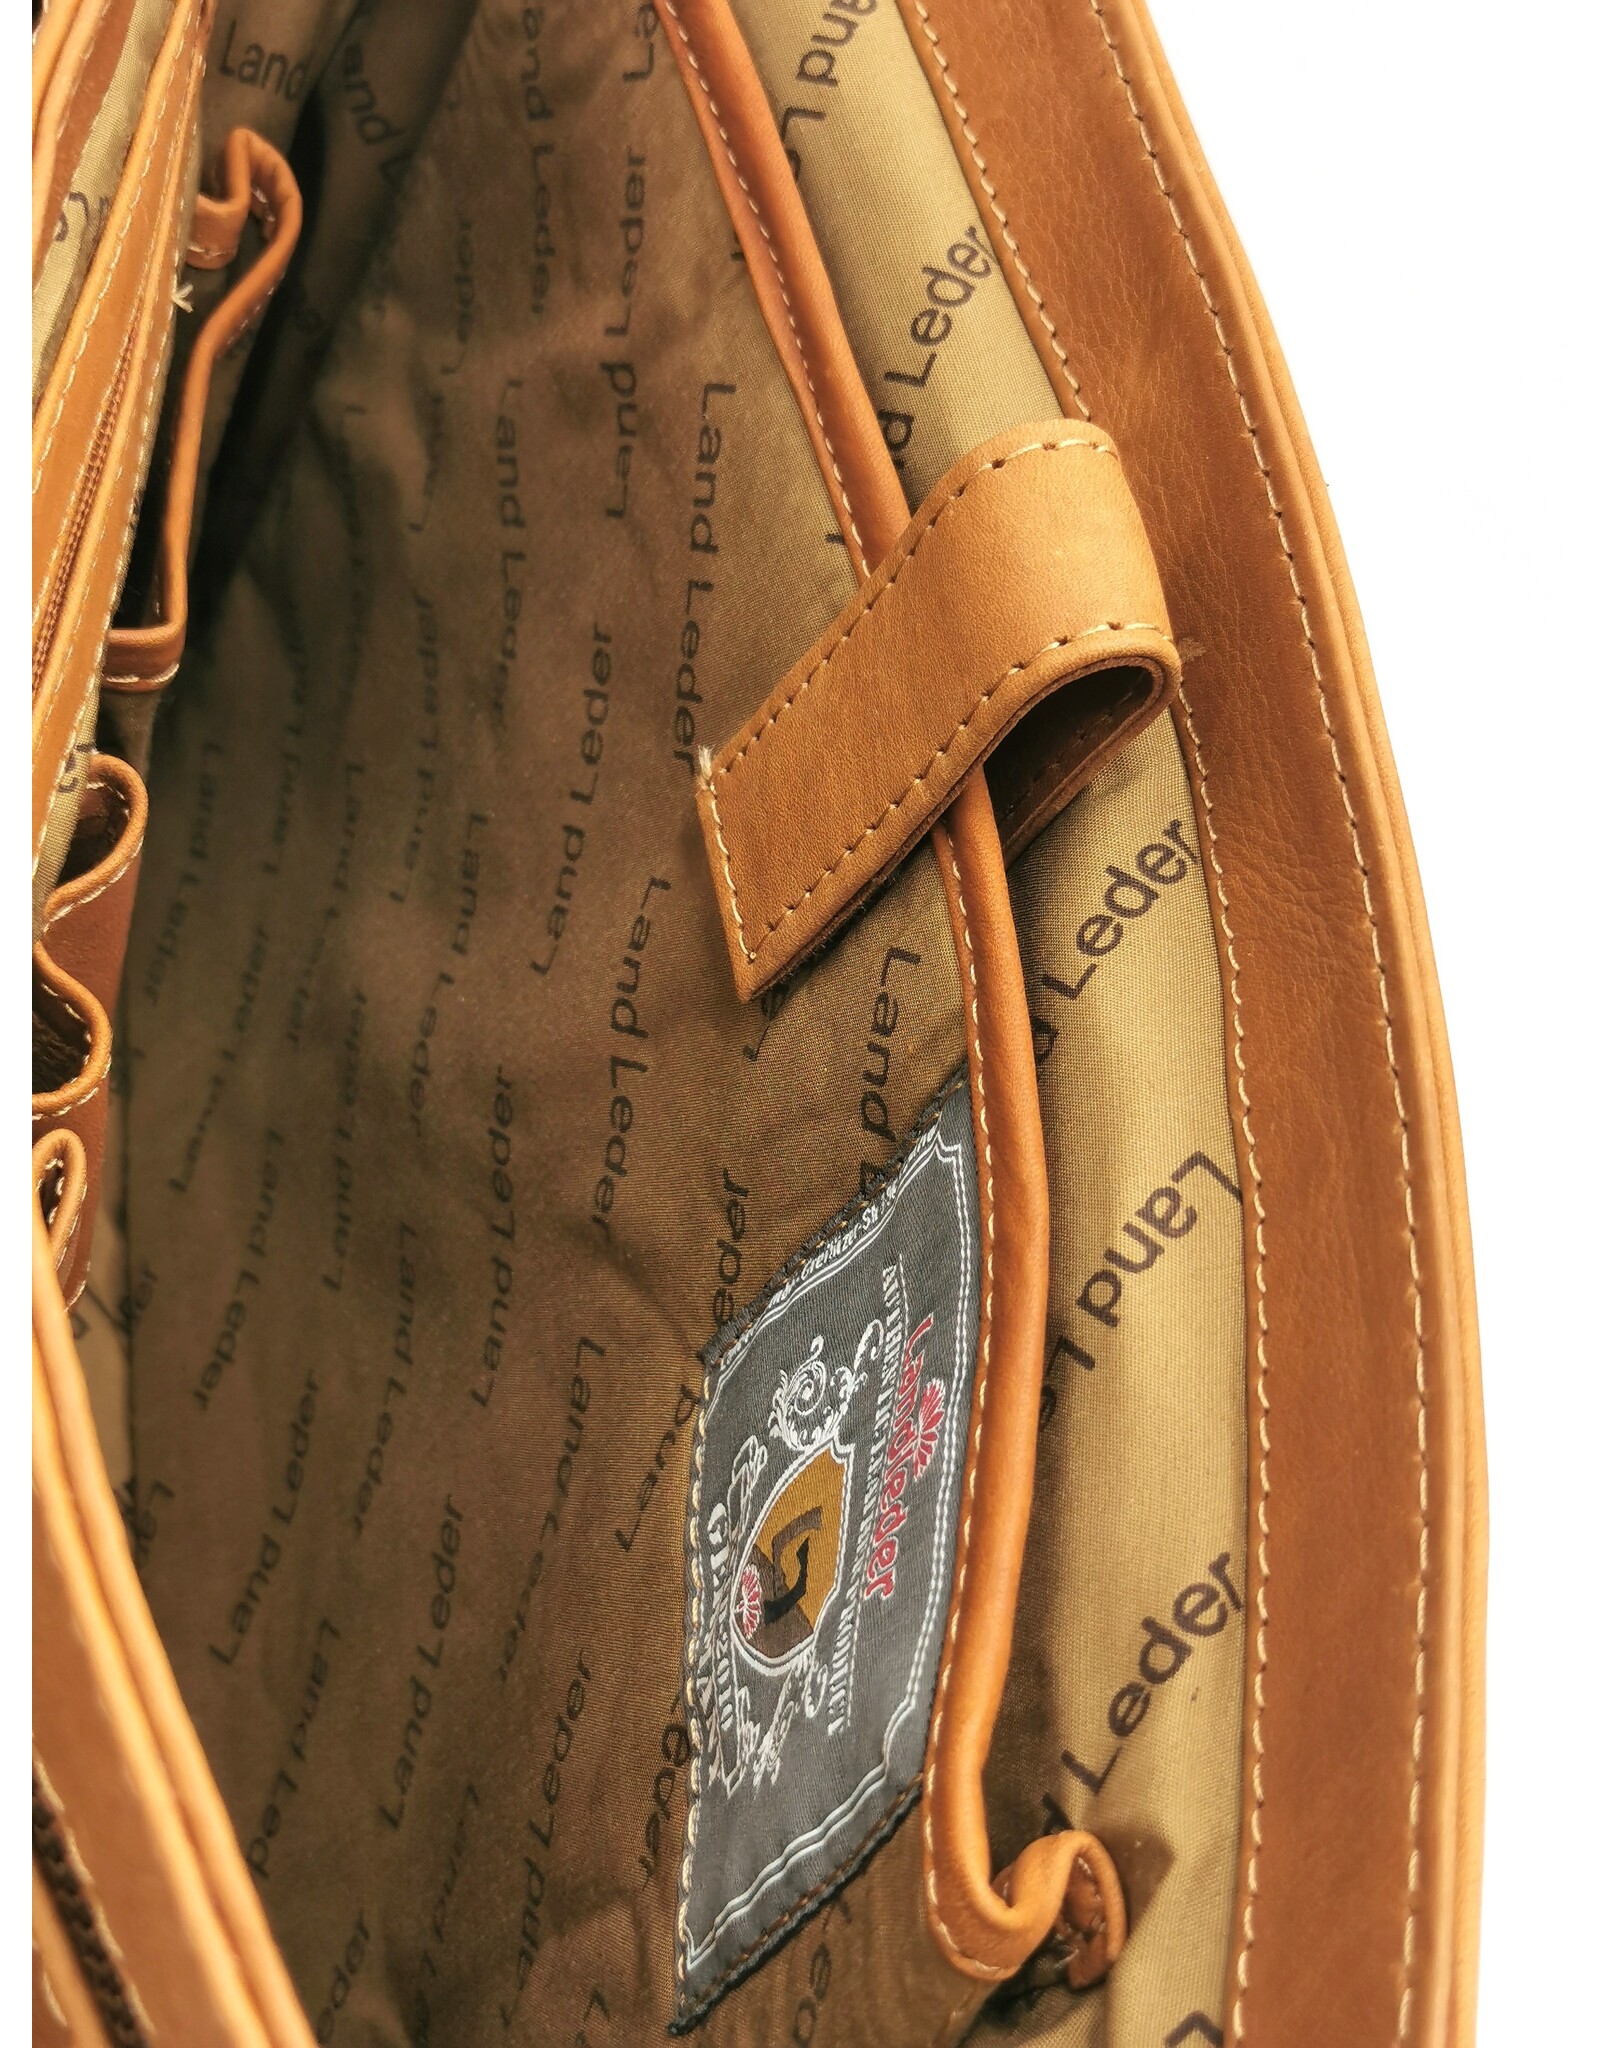 LandLeder Leather bags - Leather Messenger bag  PINCH OF WAX 35cm